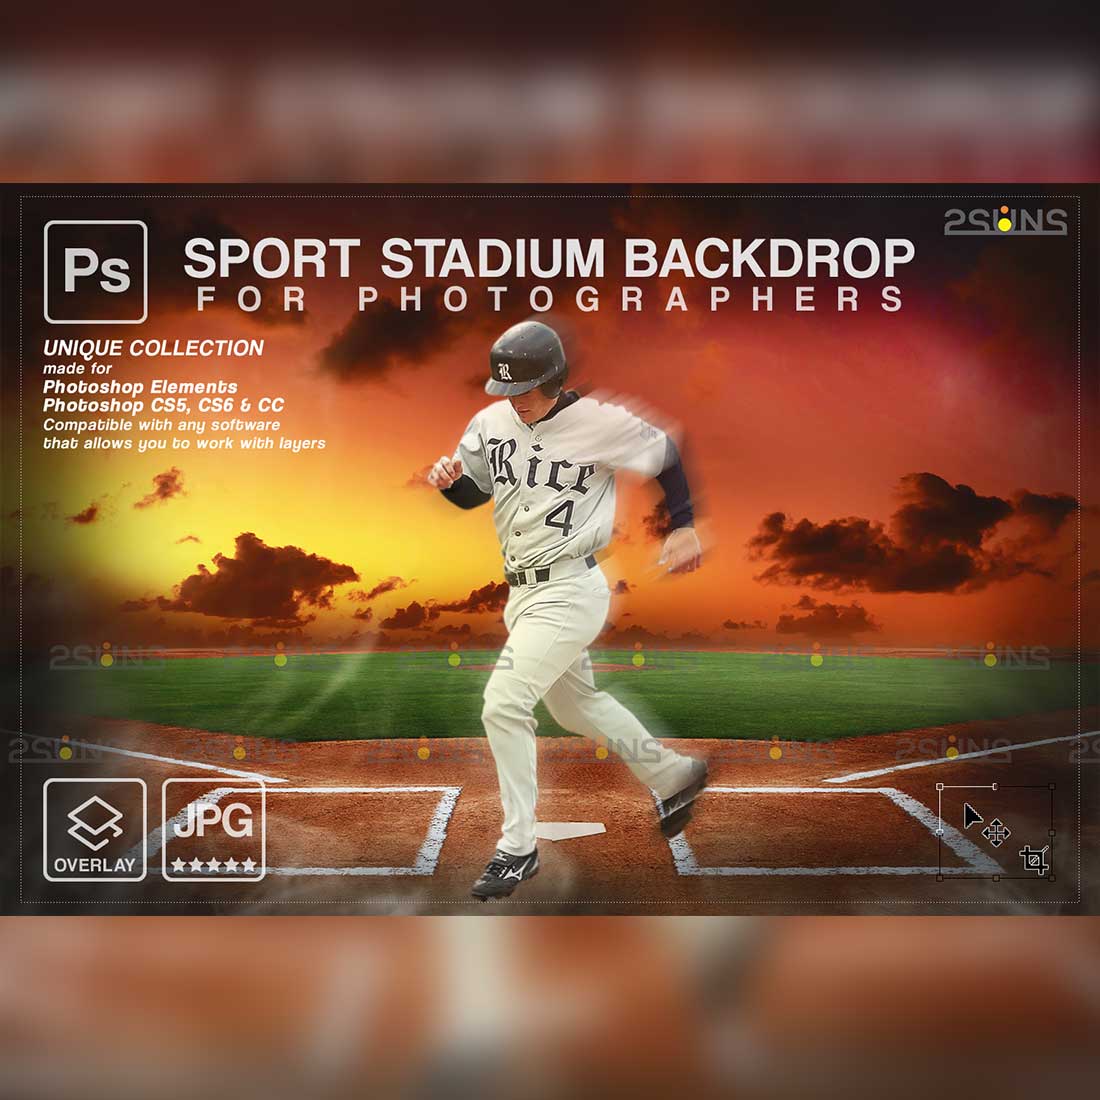 Baseball Modern And Stylish Backdrop Sports Digital Background Cover Image.